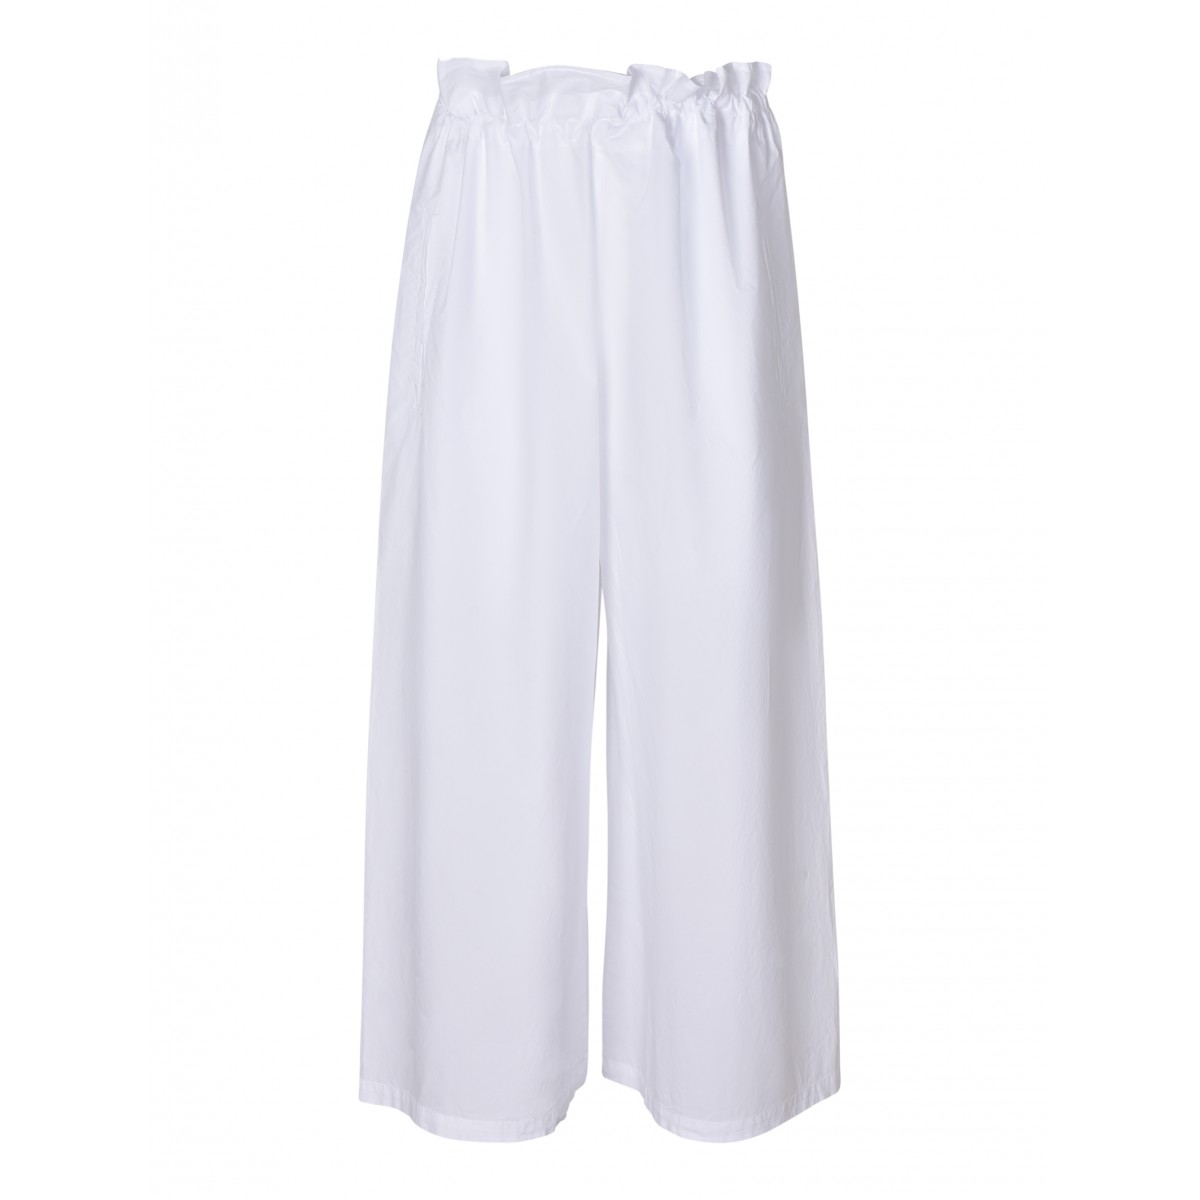 Pantalone 100% cotone white